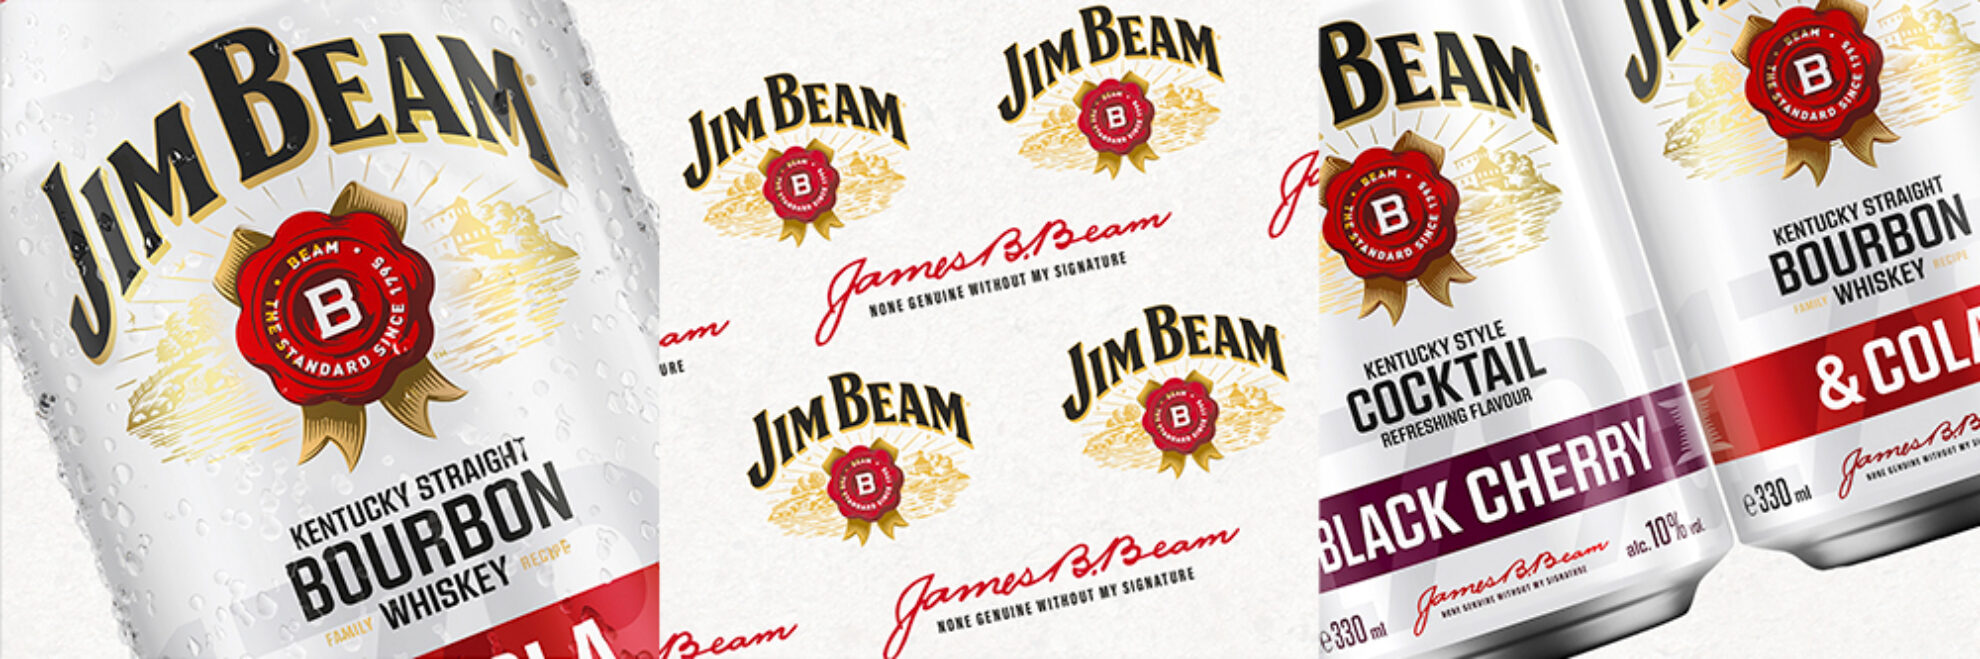 RBP Jim Beam Brand Elements Medium 1000x333